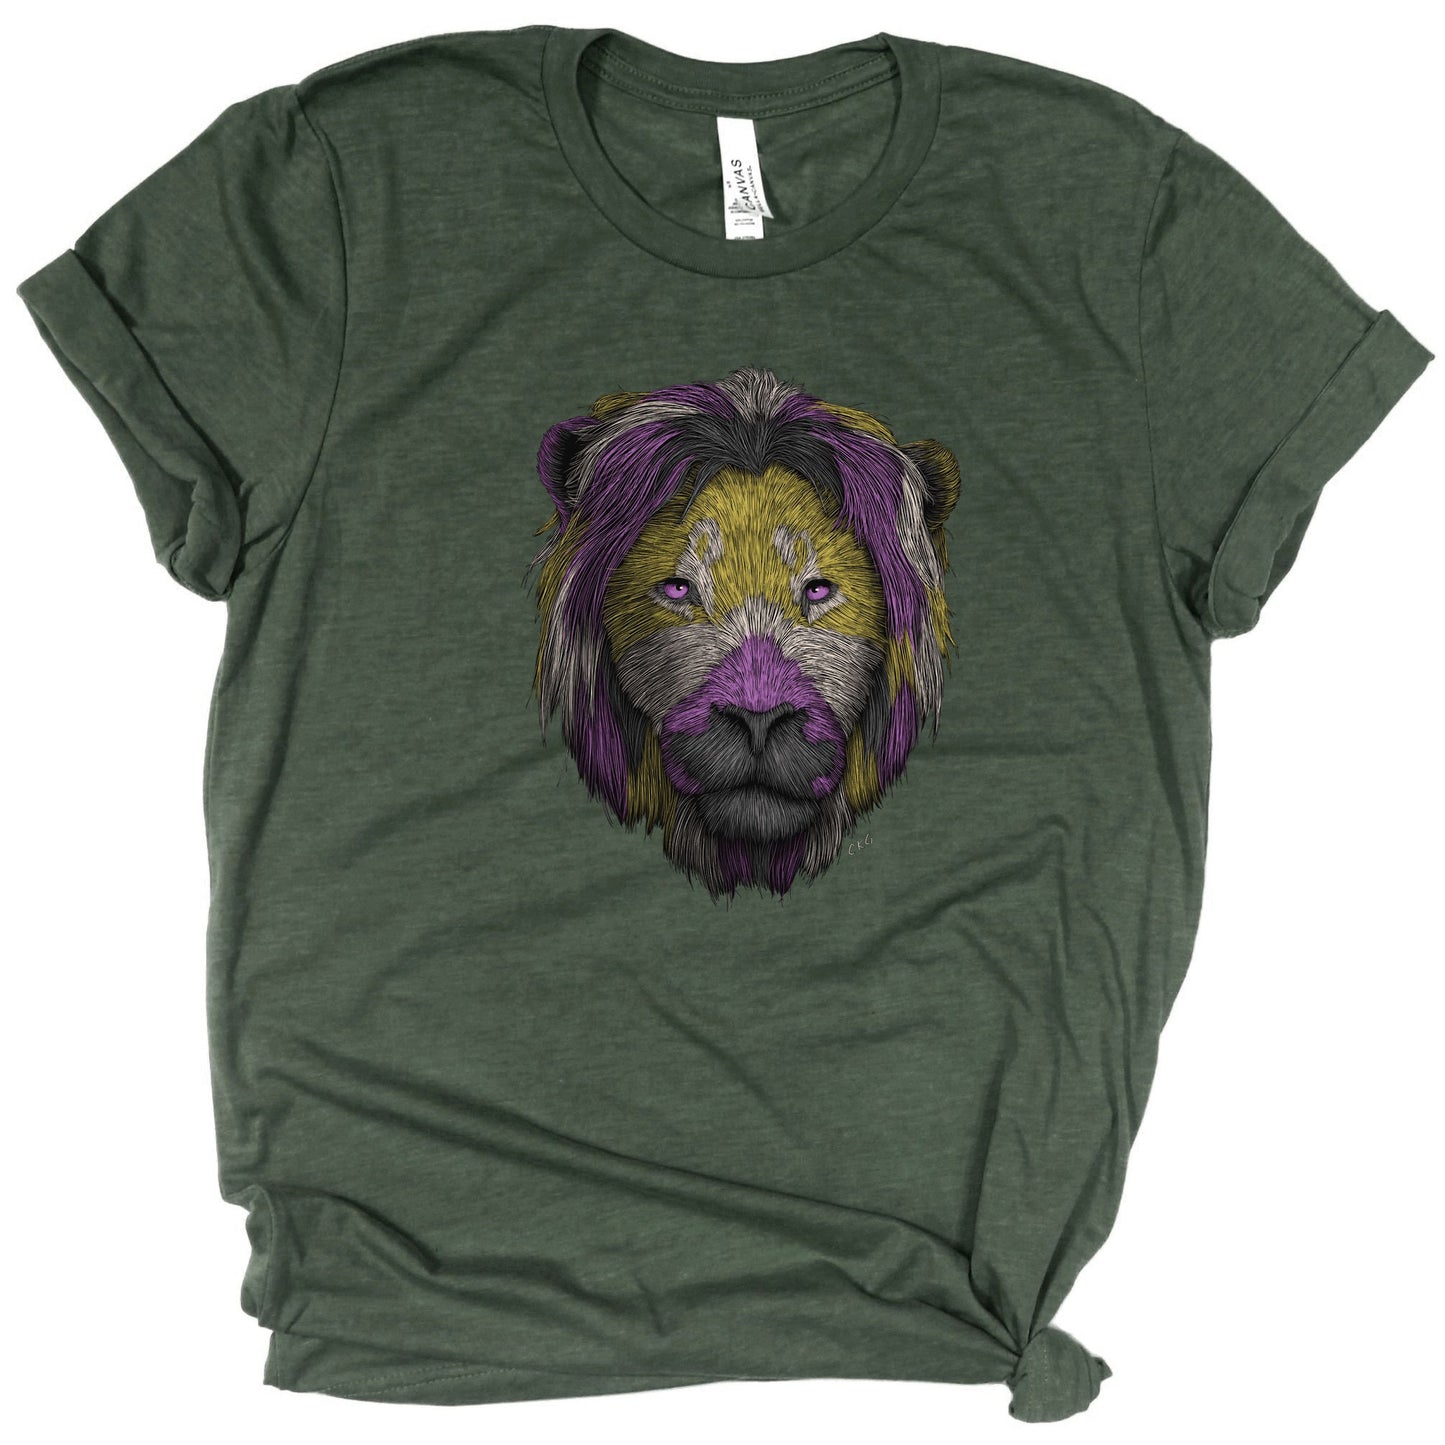 Nonbinary Lion Shirt